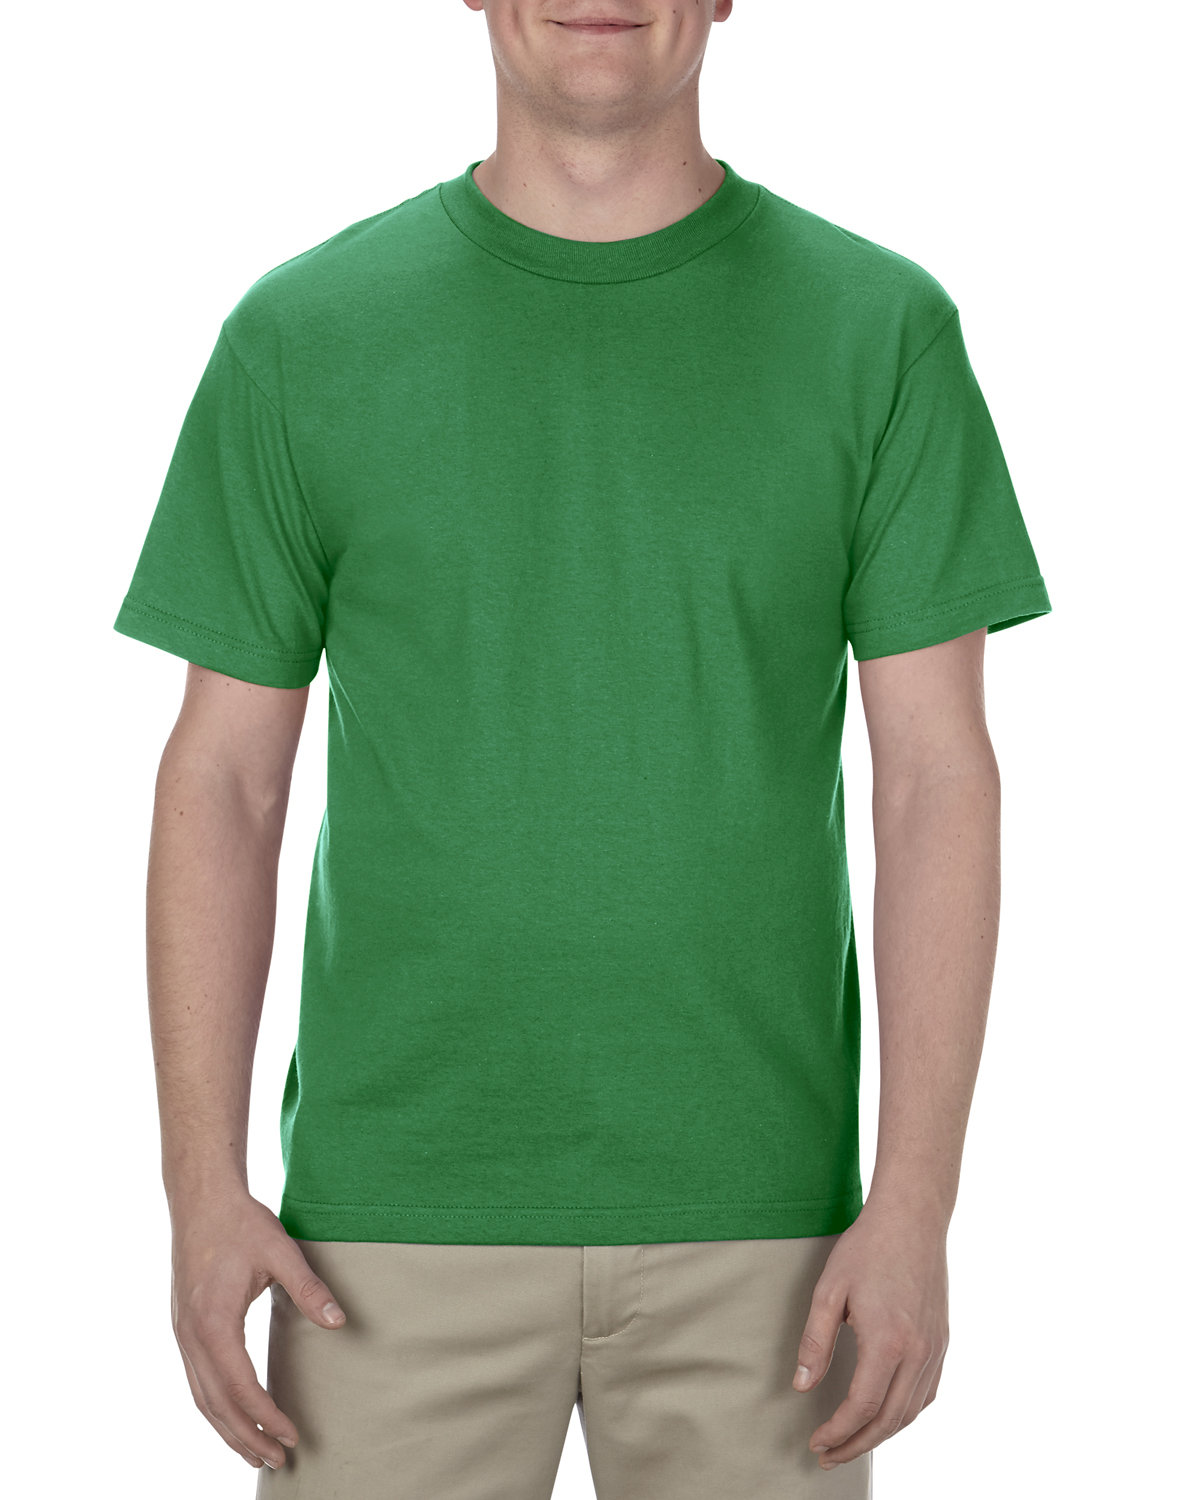 American Apparel Unisex Heavyweight Cotton T-Shirt kelly 